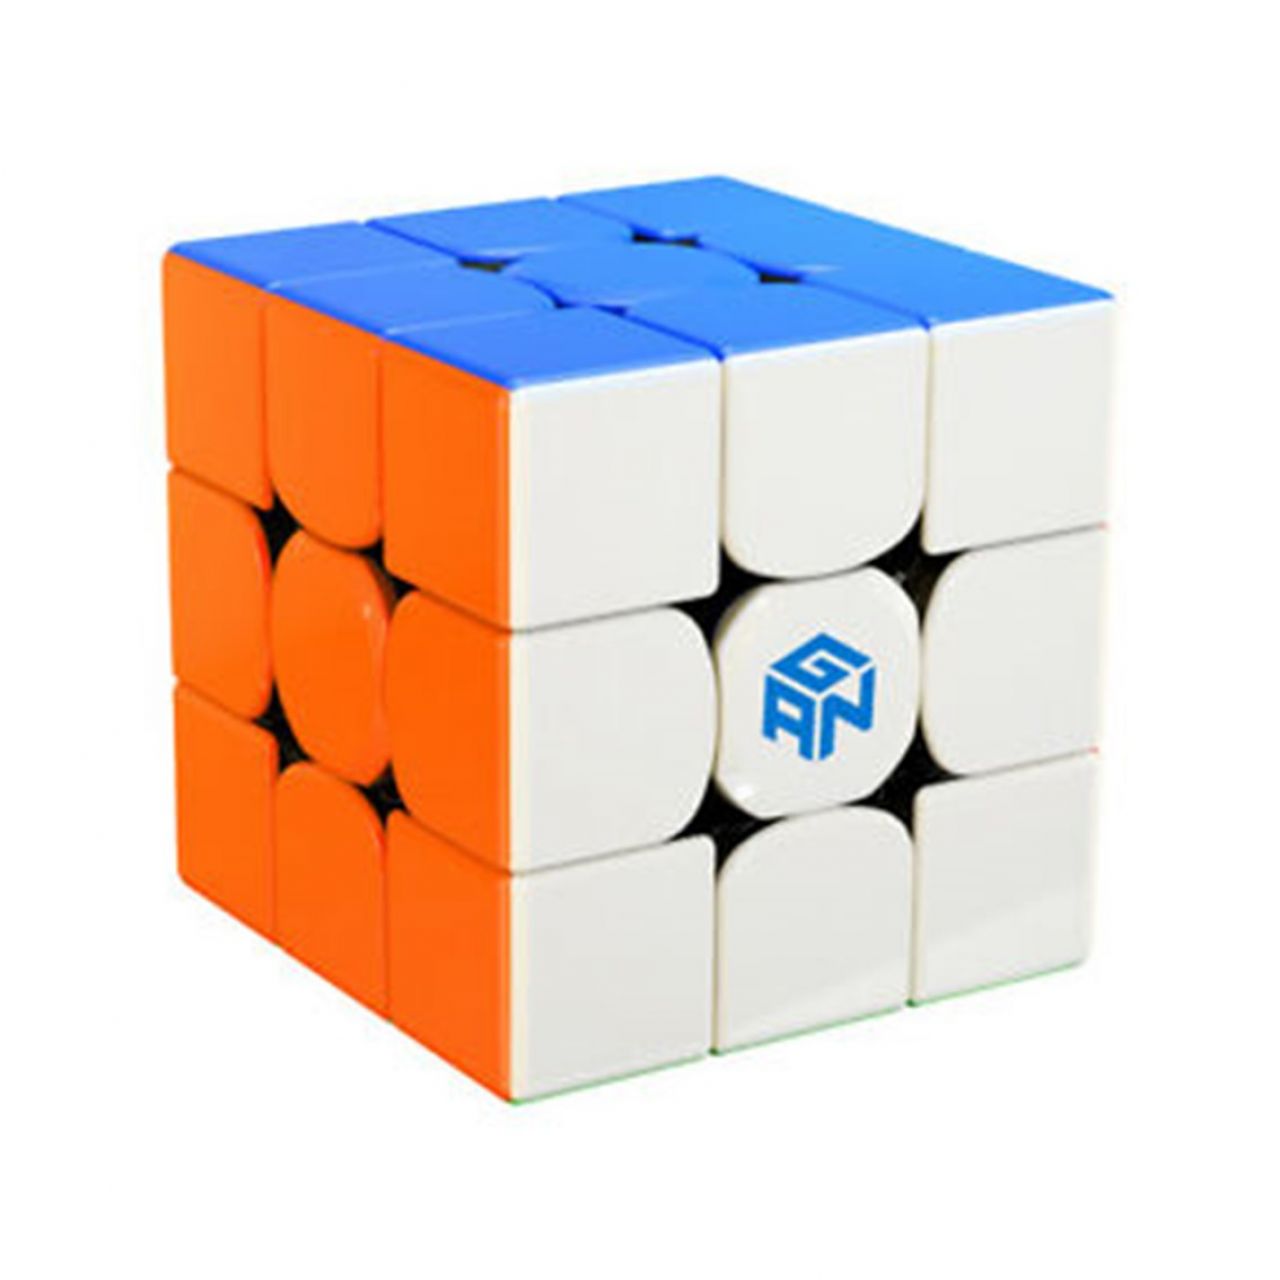 Destacada Cubo de Rubik 356